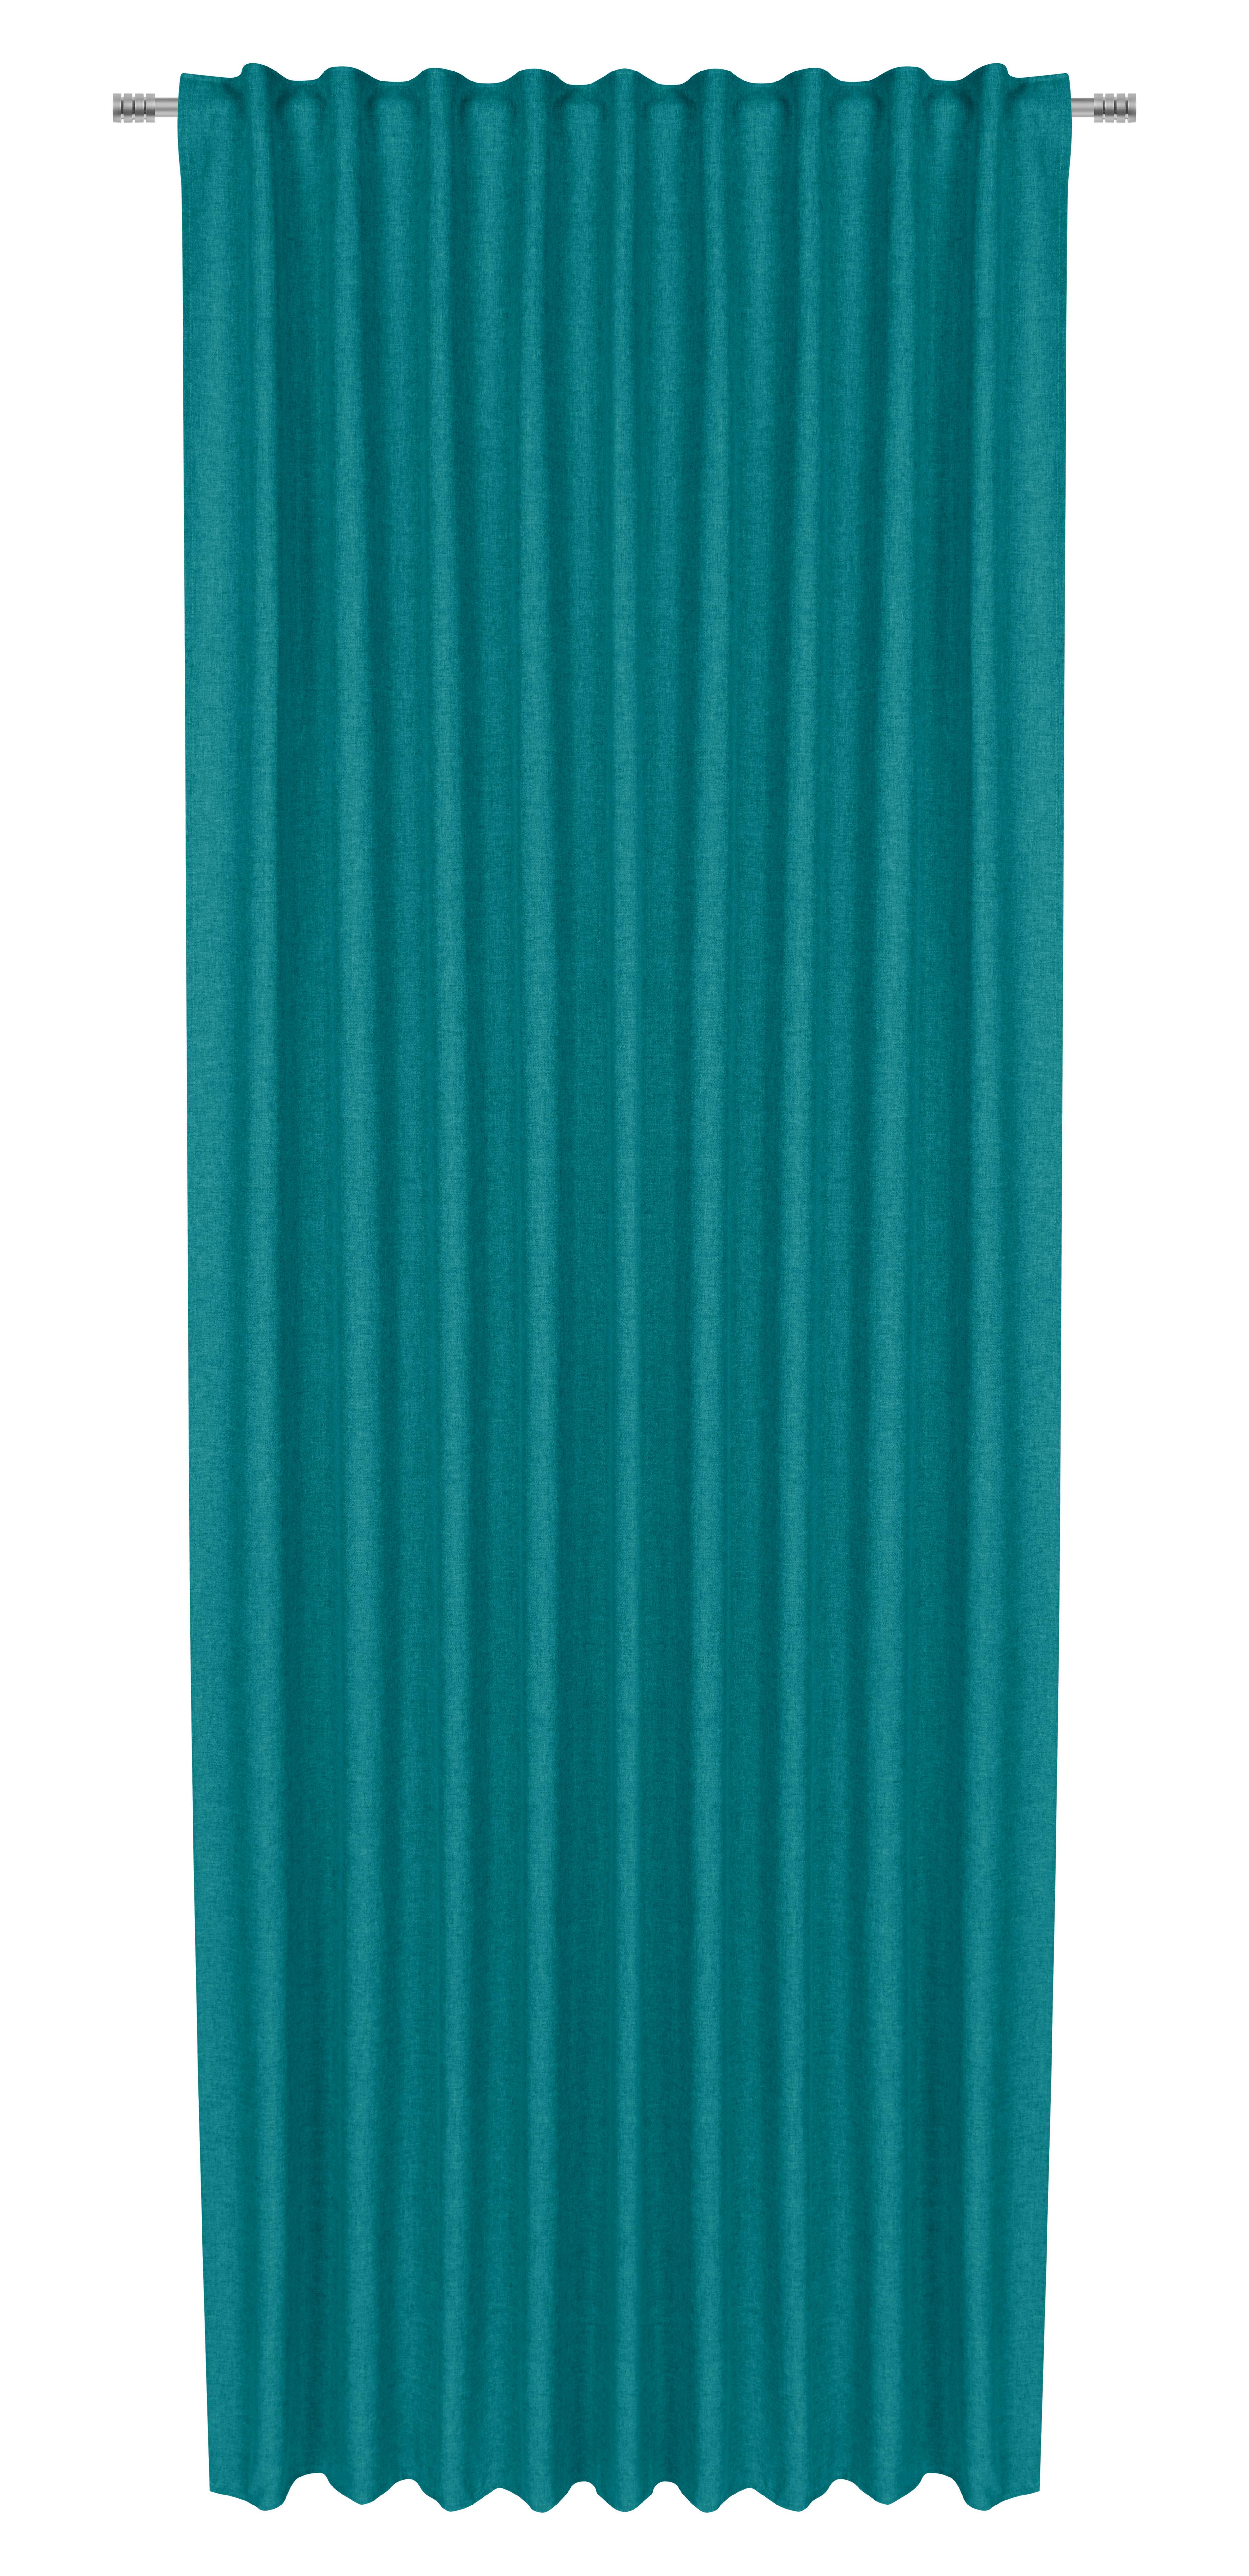 Hotový Záves Ulrich, 135/245cm, Modrá - svetlomodrá, textil (135/245cm) - Modern Living